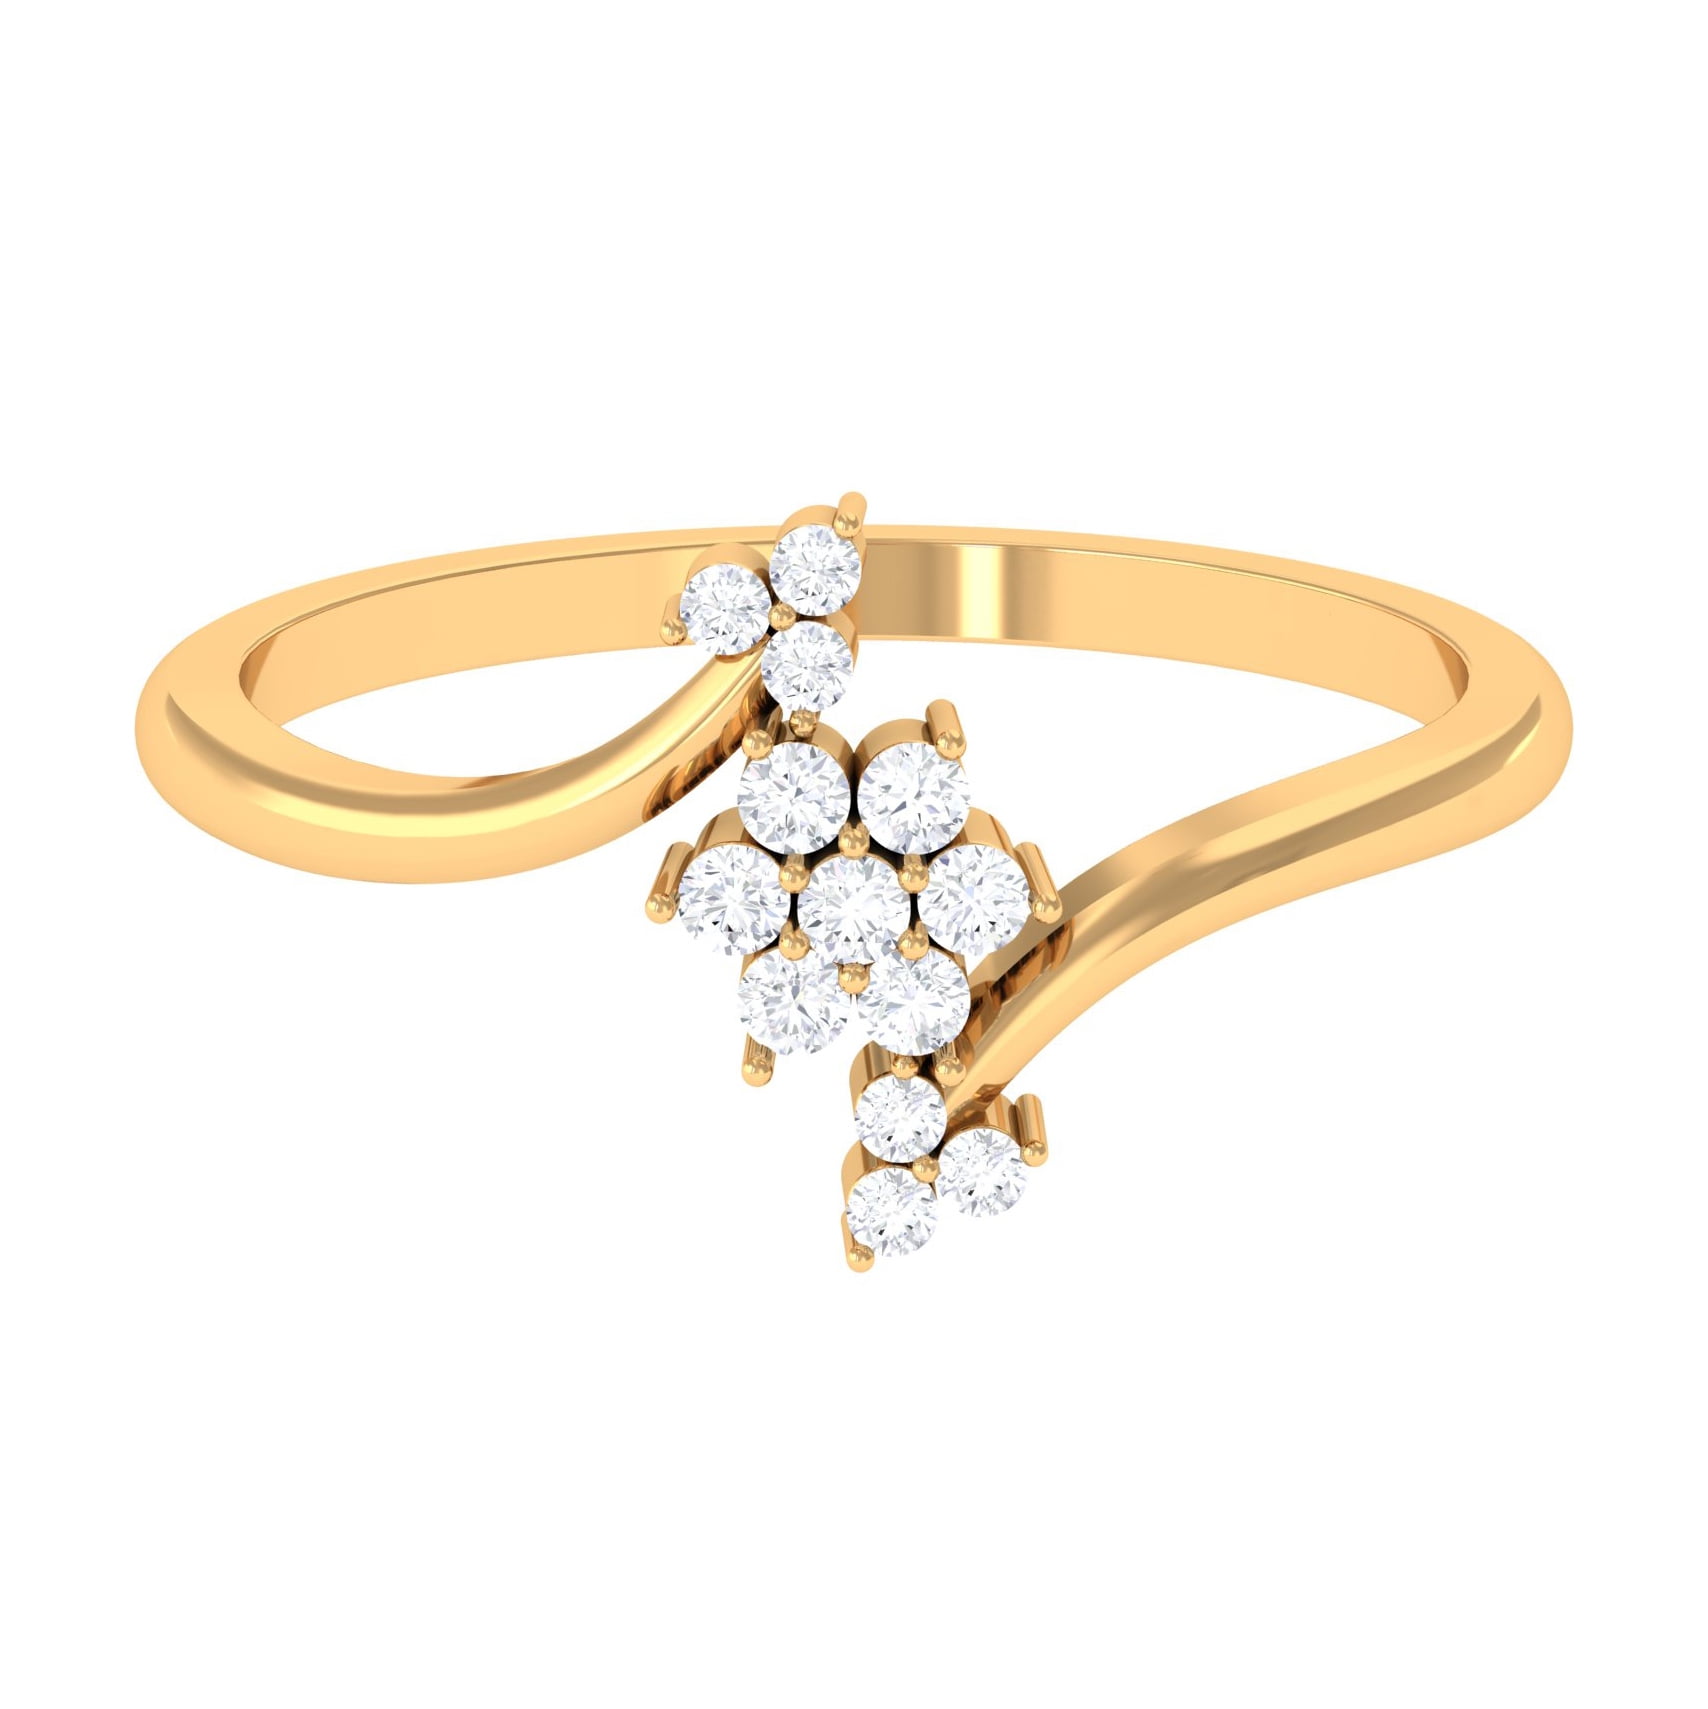 Crystal Diamond Ring - ₹17,600 Pearlkraft Regal Design Collection